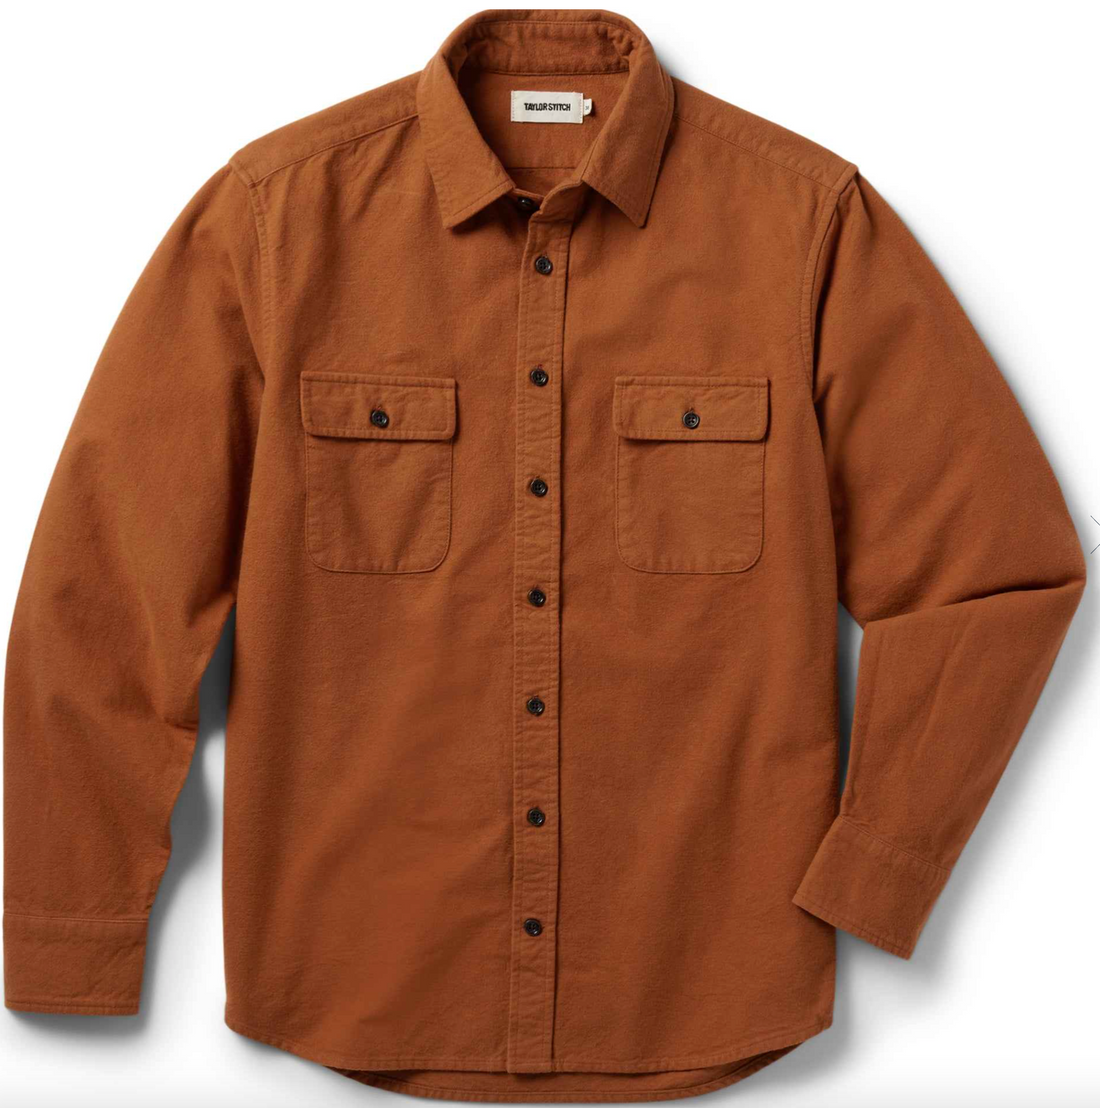 Taylor Stitch - The Yosemite Shirt in Copper